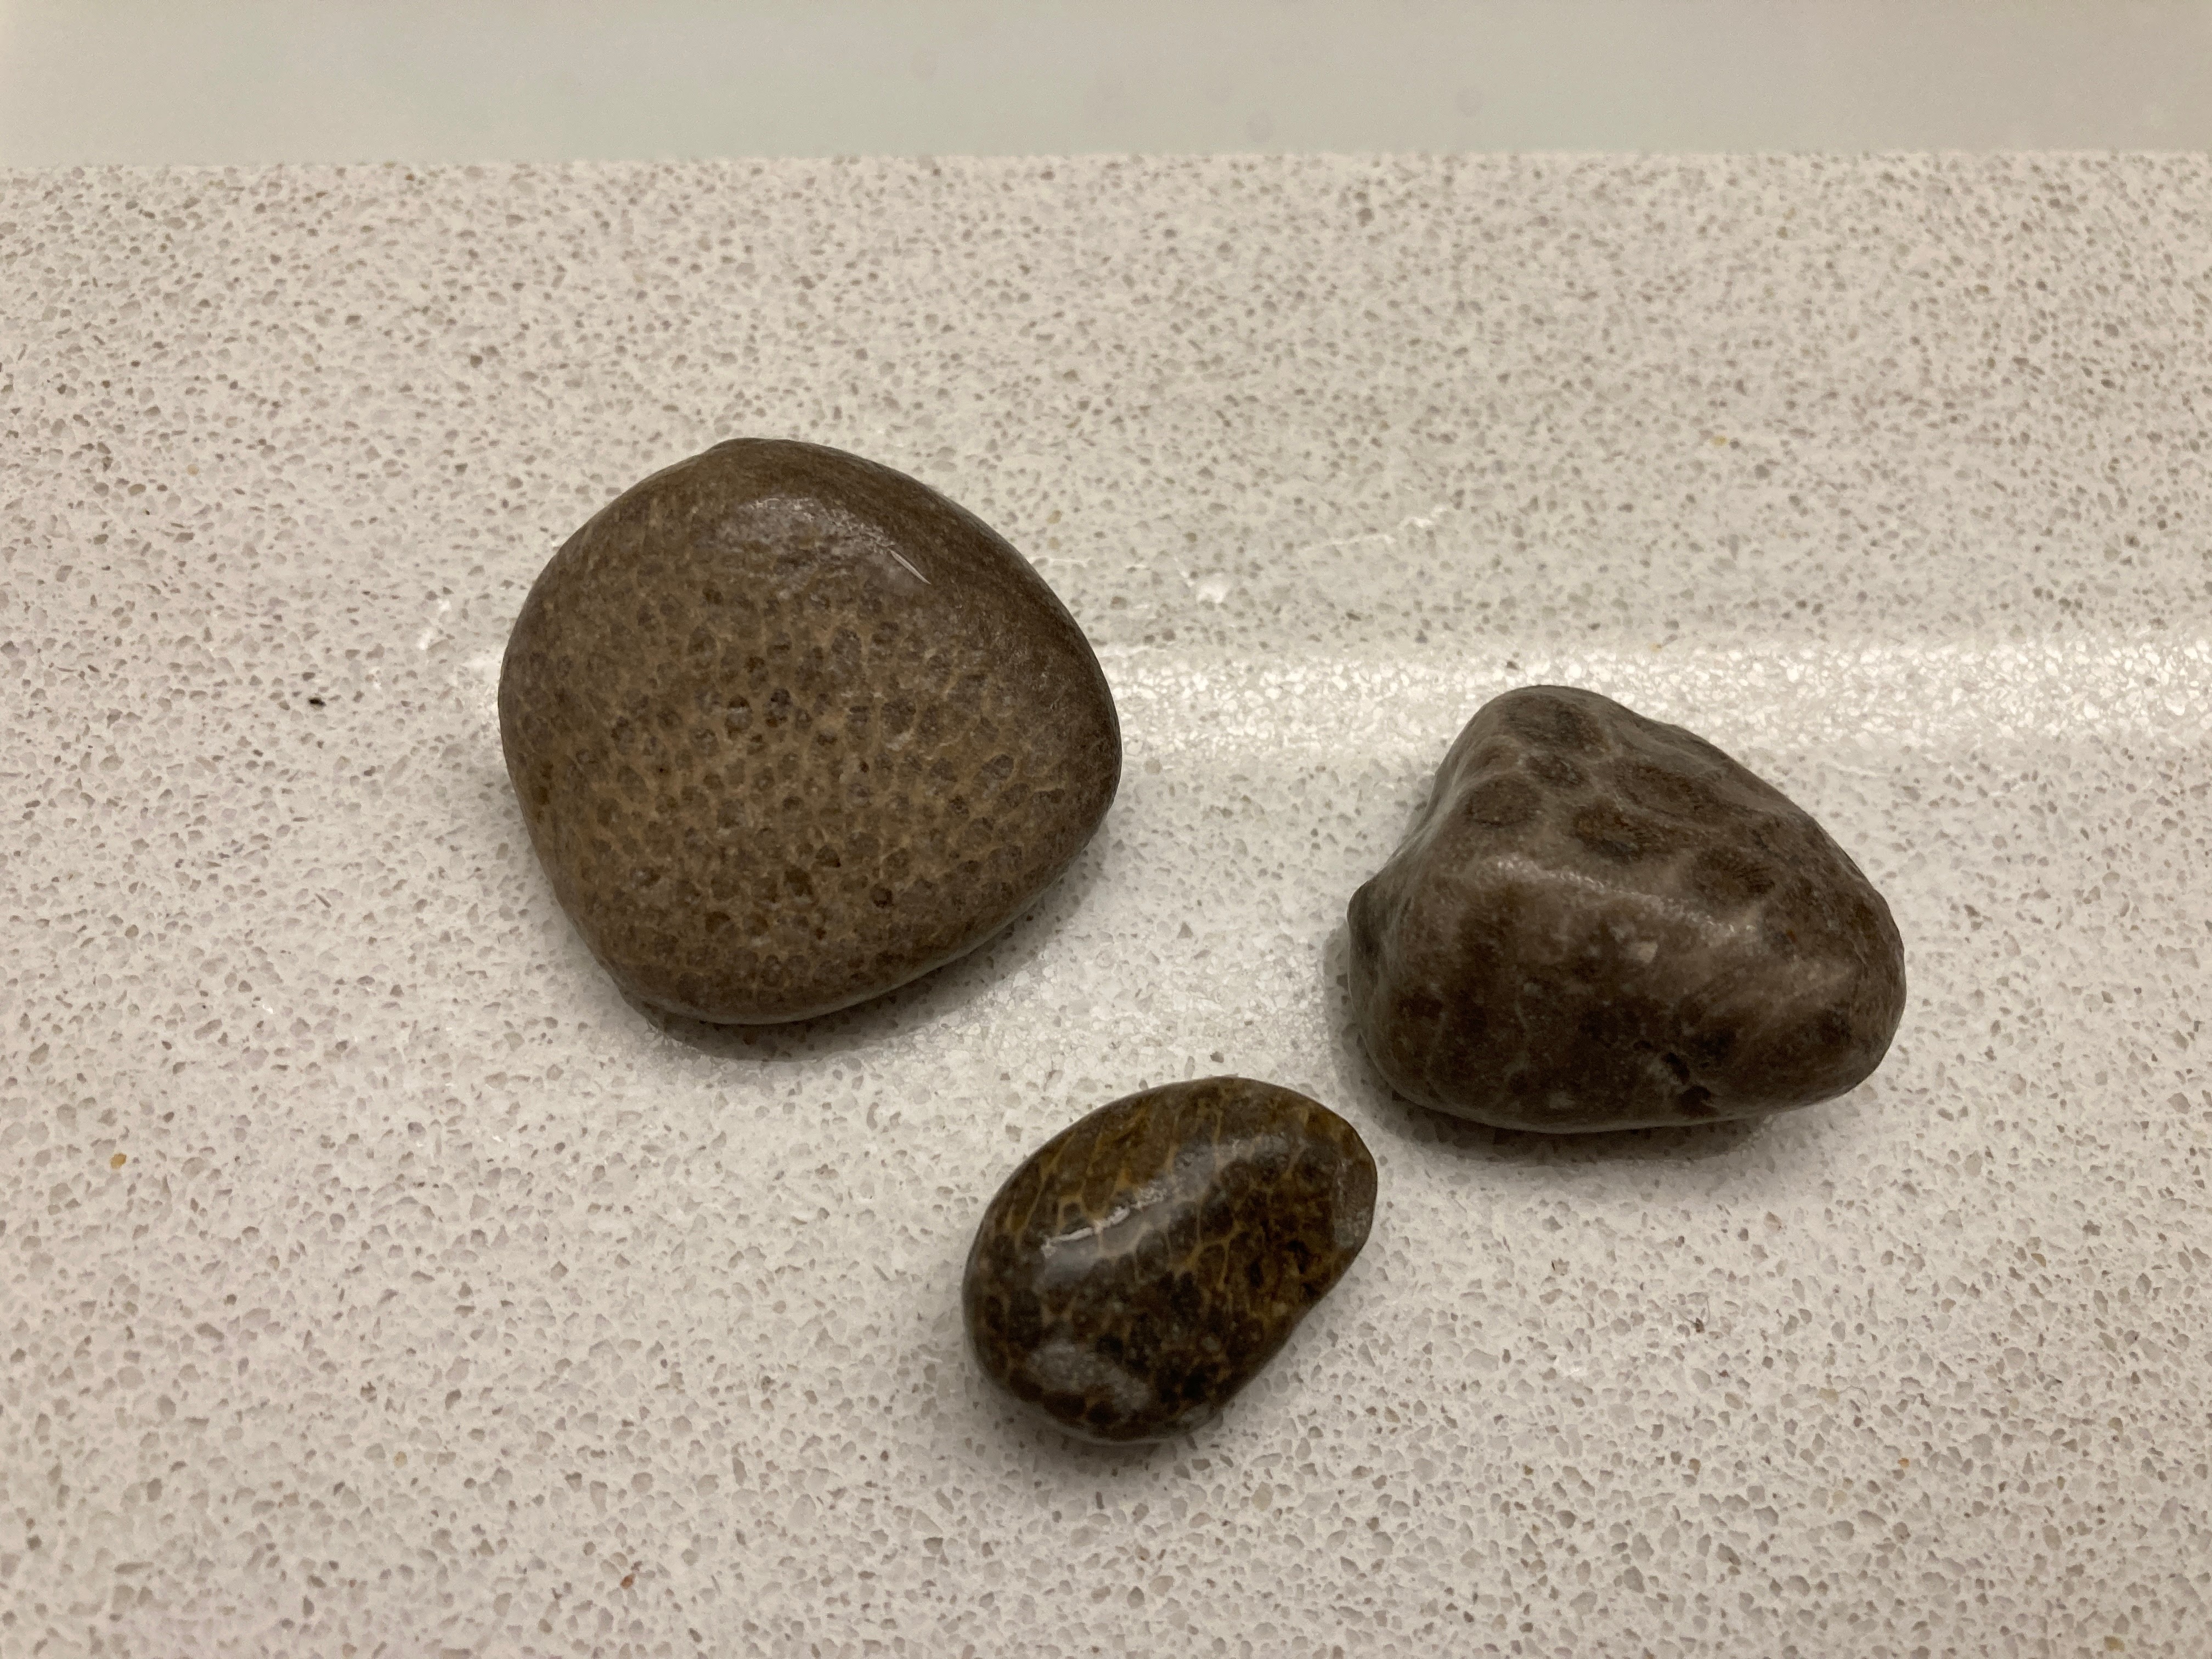 Petoskey stone found at Bayfront Park, Petoskey, MI (Taken on October 15, 2022). 